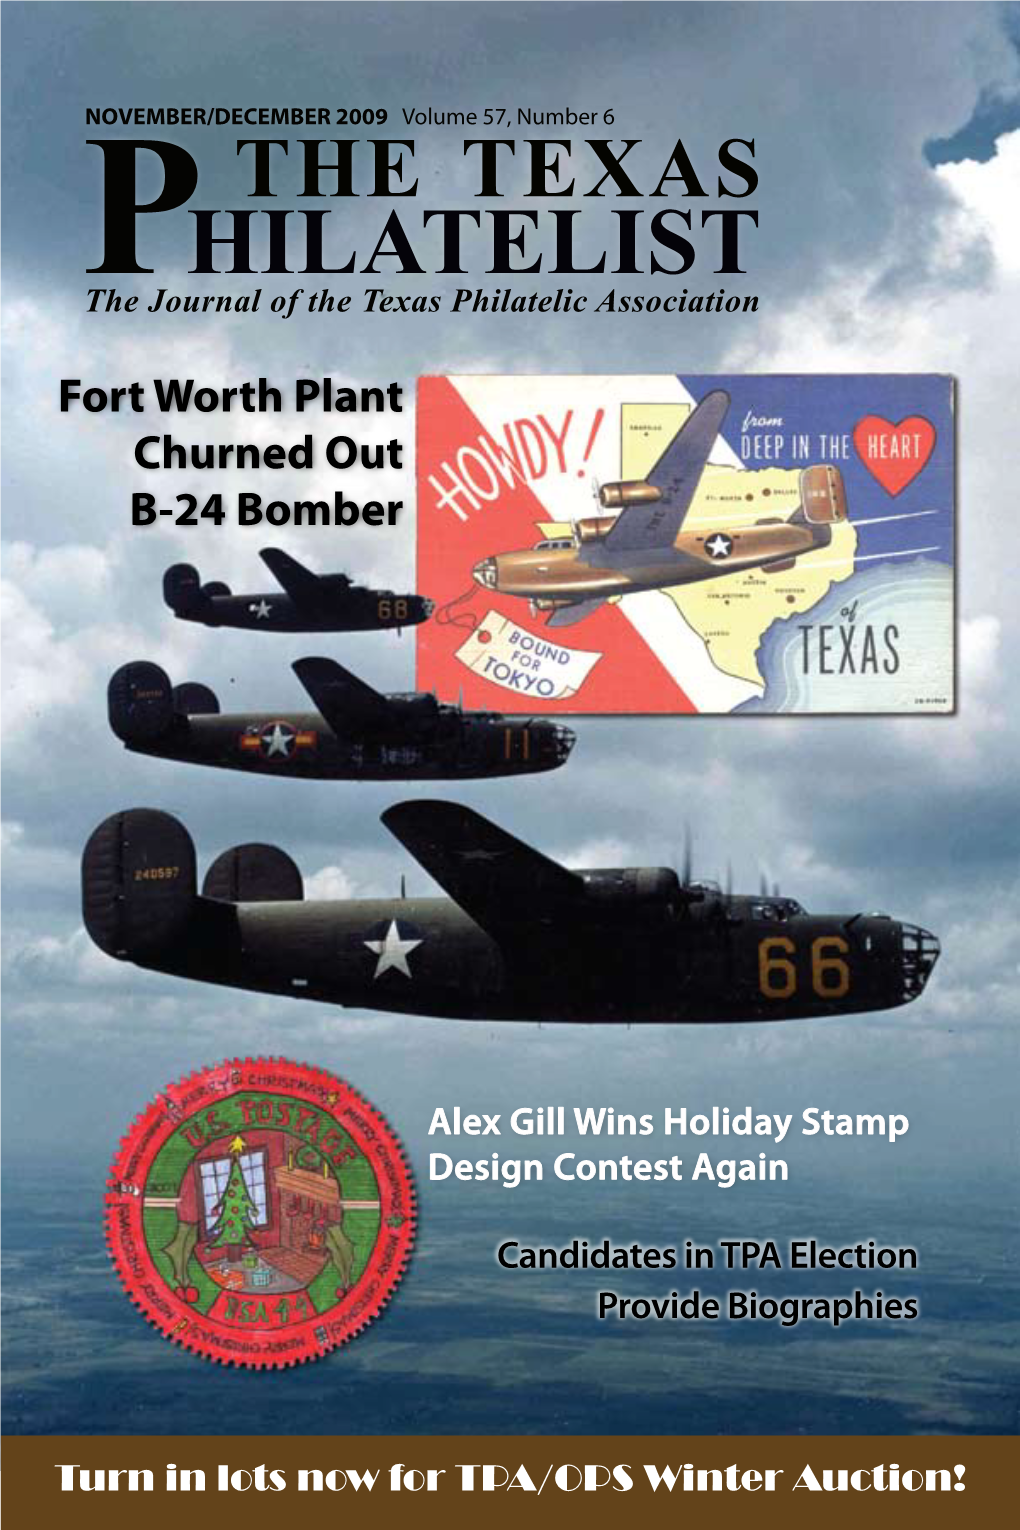 HILATELIST Pthe Journal of the Texas Philatelic Association Fort Worth Plant Churned out B-24 Bomber